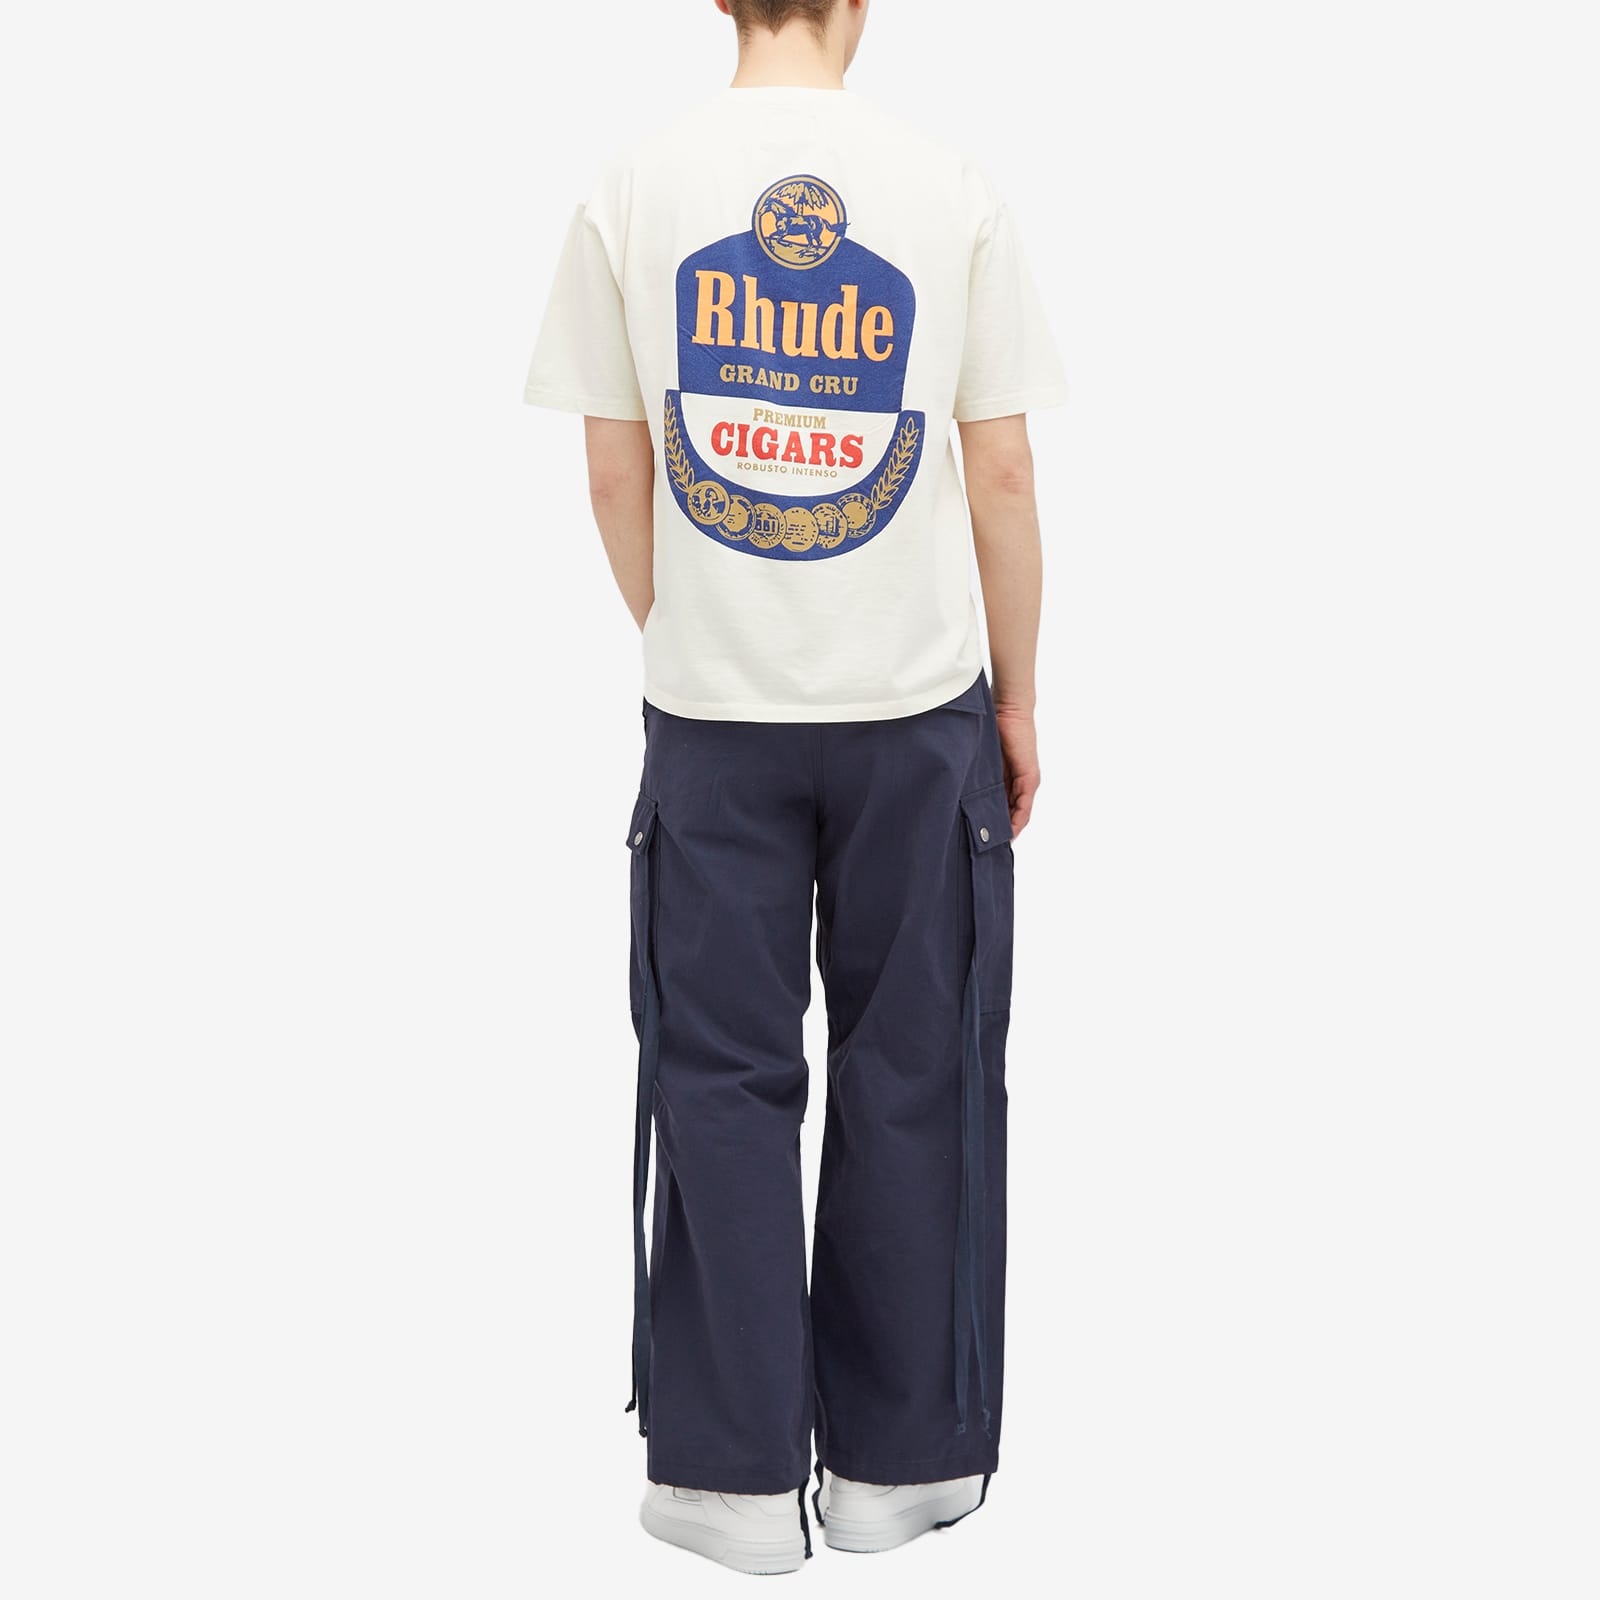 Rhude Grand Cru T-Shirt - 4